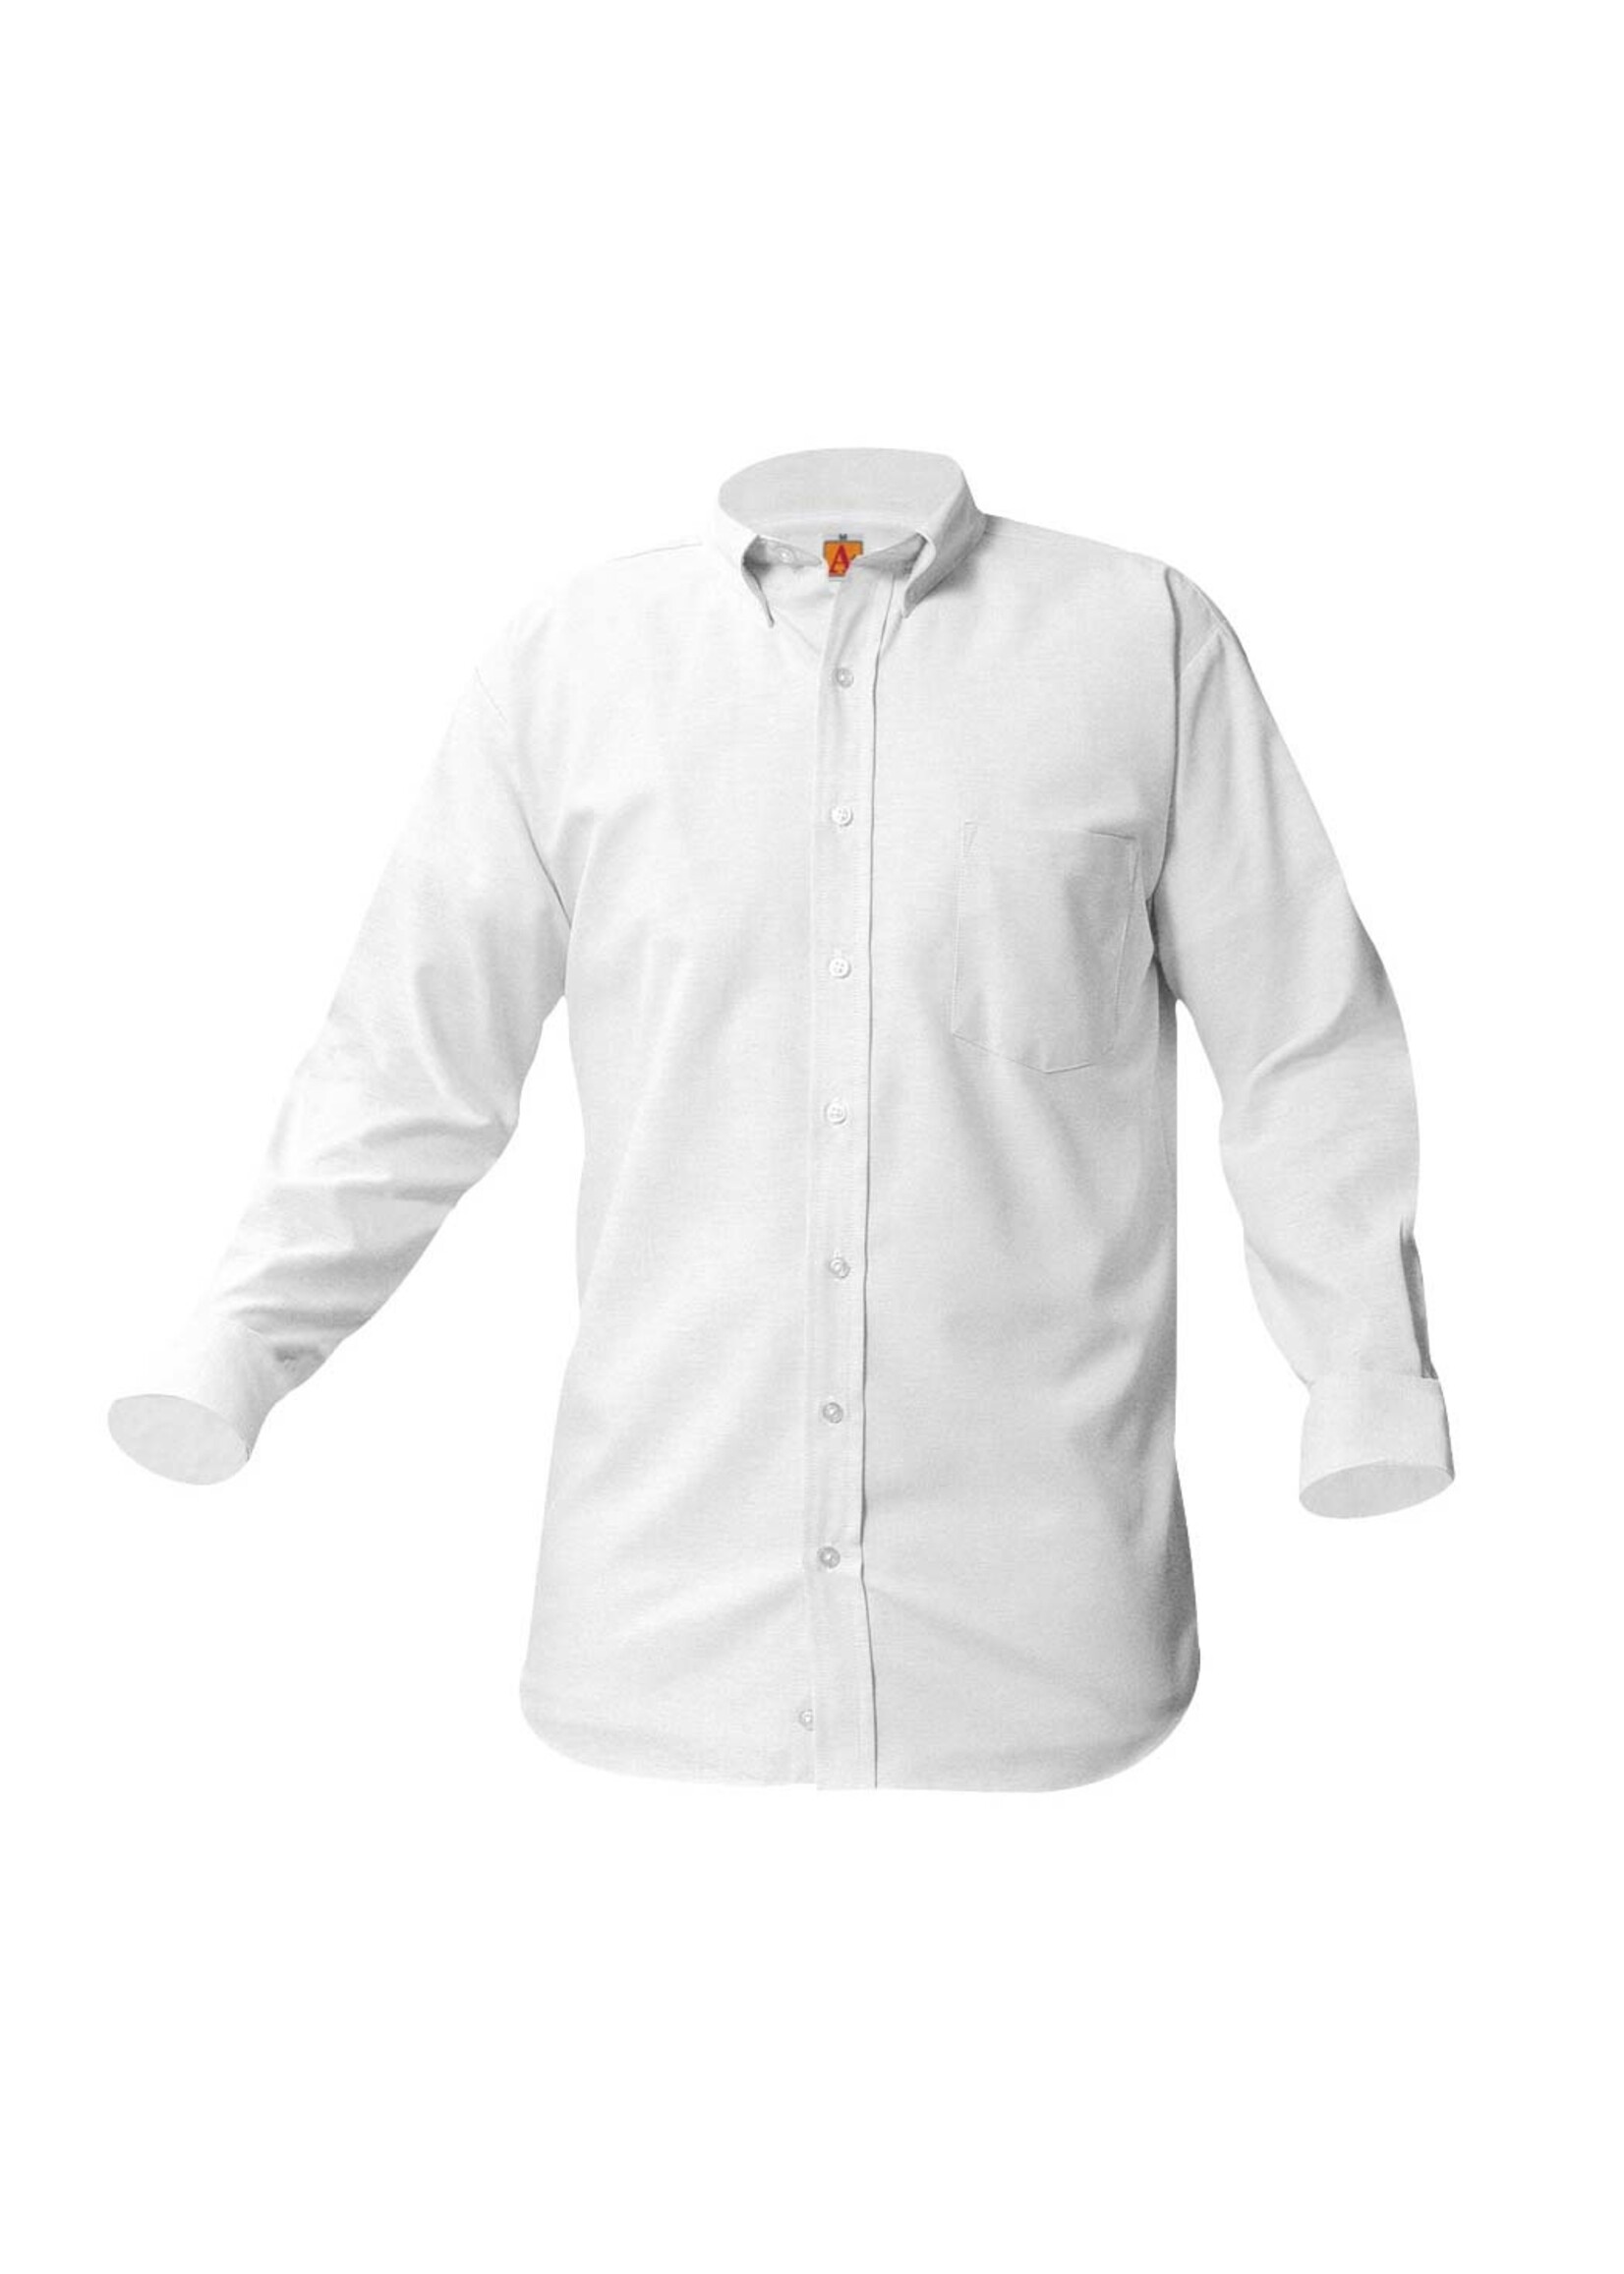 JDA White Long Sleeve Oxford Shirt